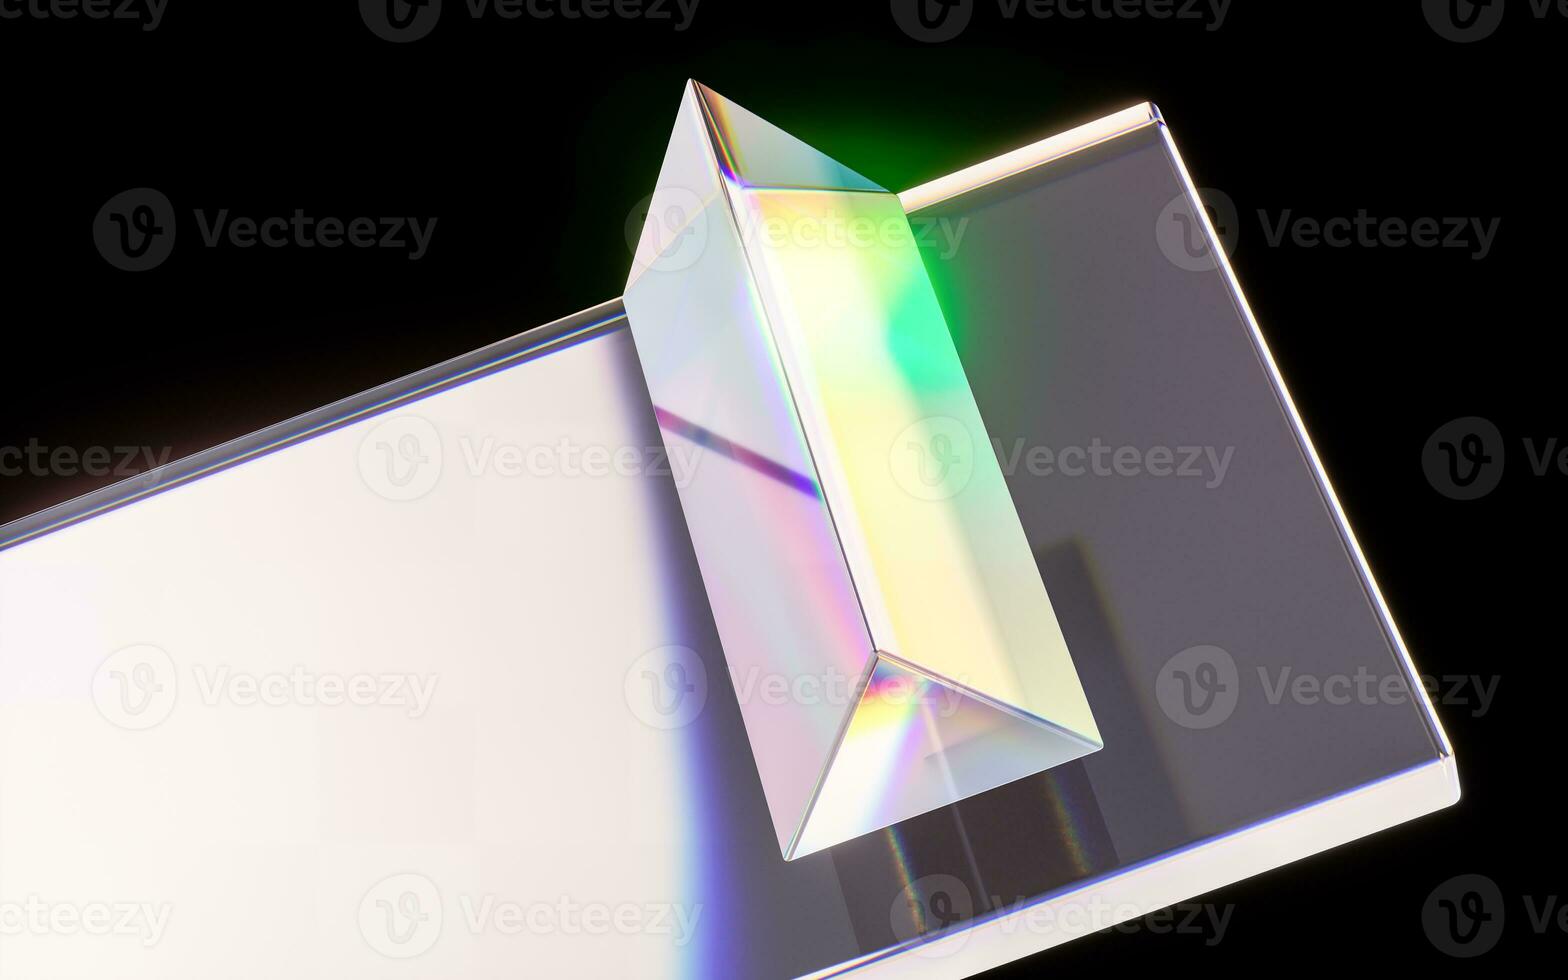 glas geometrieën met spreiding kleuren, 3d weergave. foto